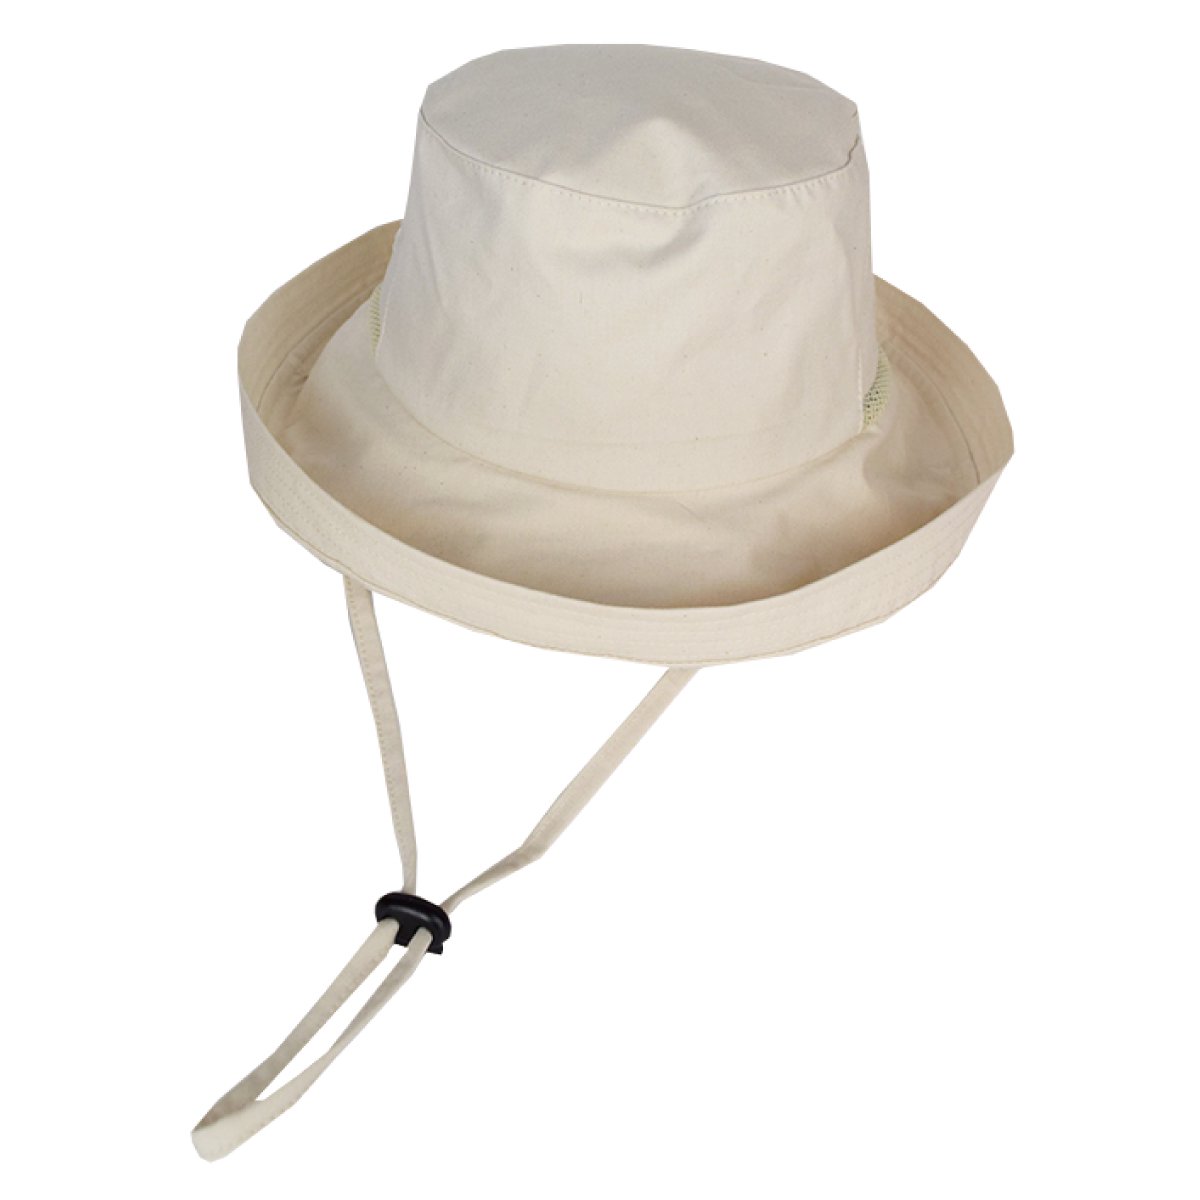  Parasol Forma Hat【被る日傘】※4月下旬再入荷